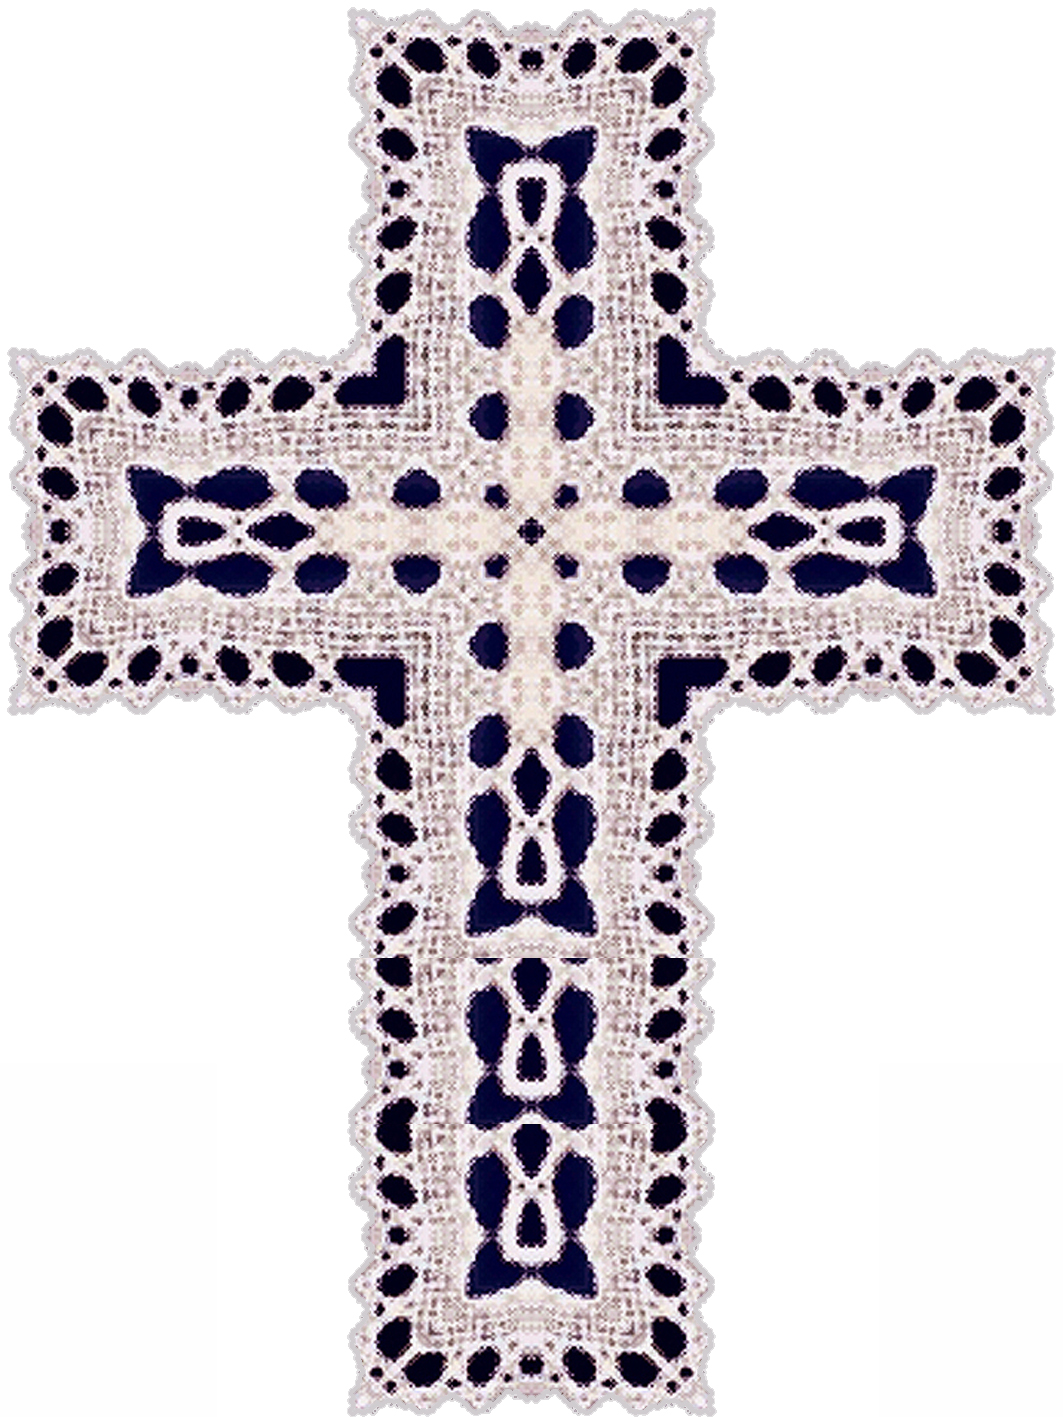 CHRISTIAN CROCHET PATTERNS – Crochet Patterns